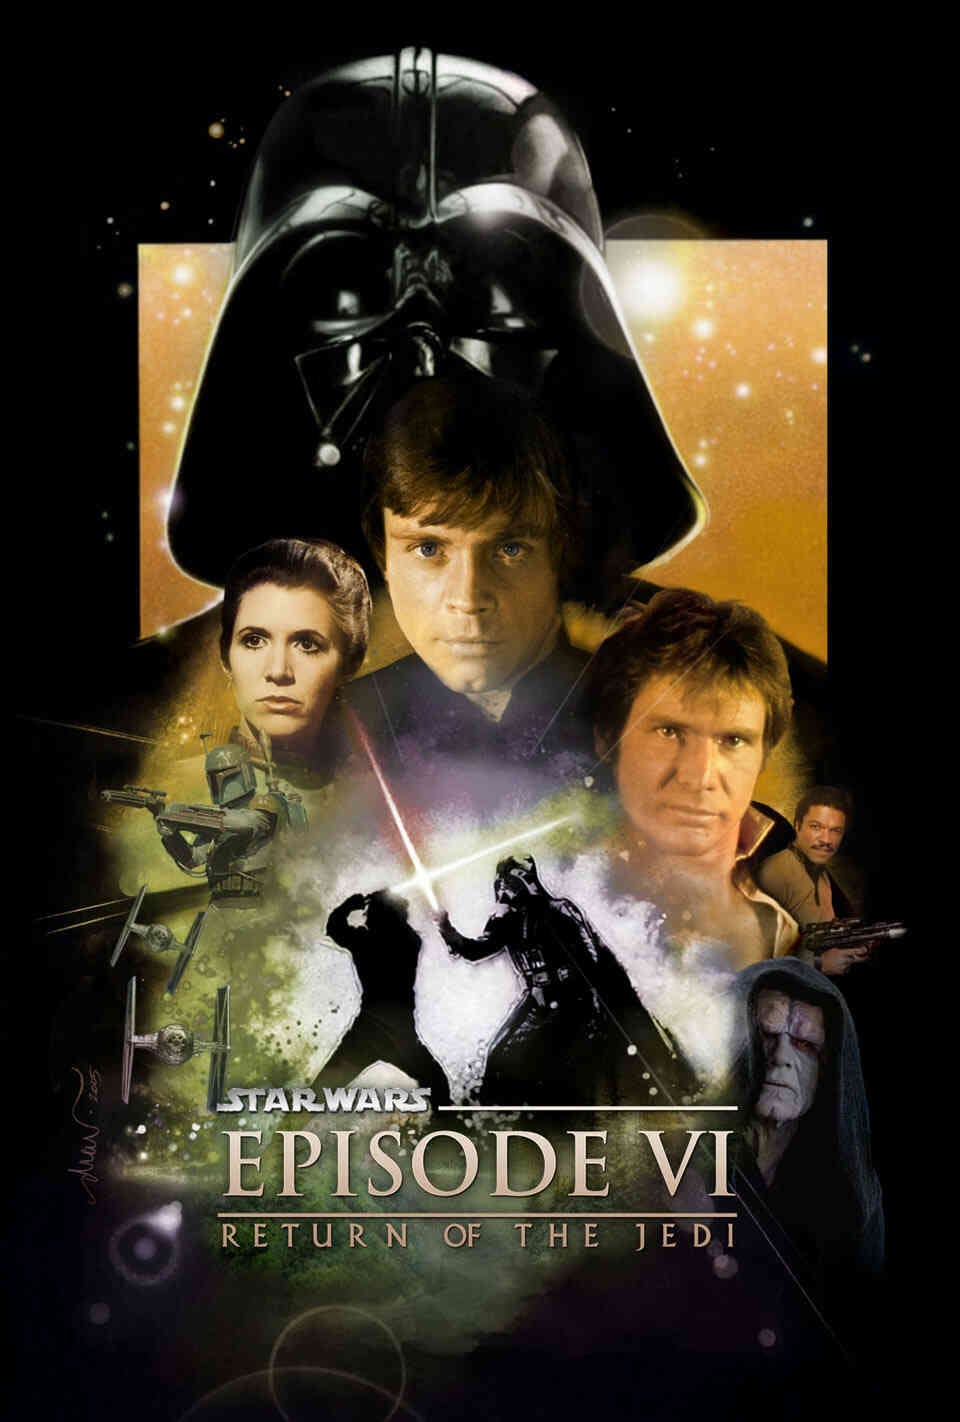 Read Episode VI - Return of the Jedi screenplay.